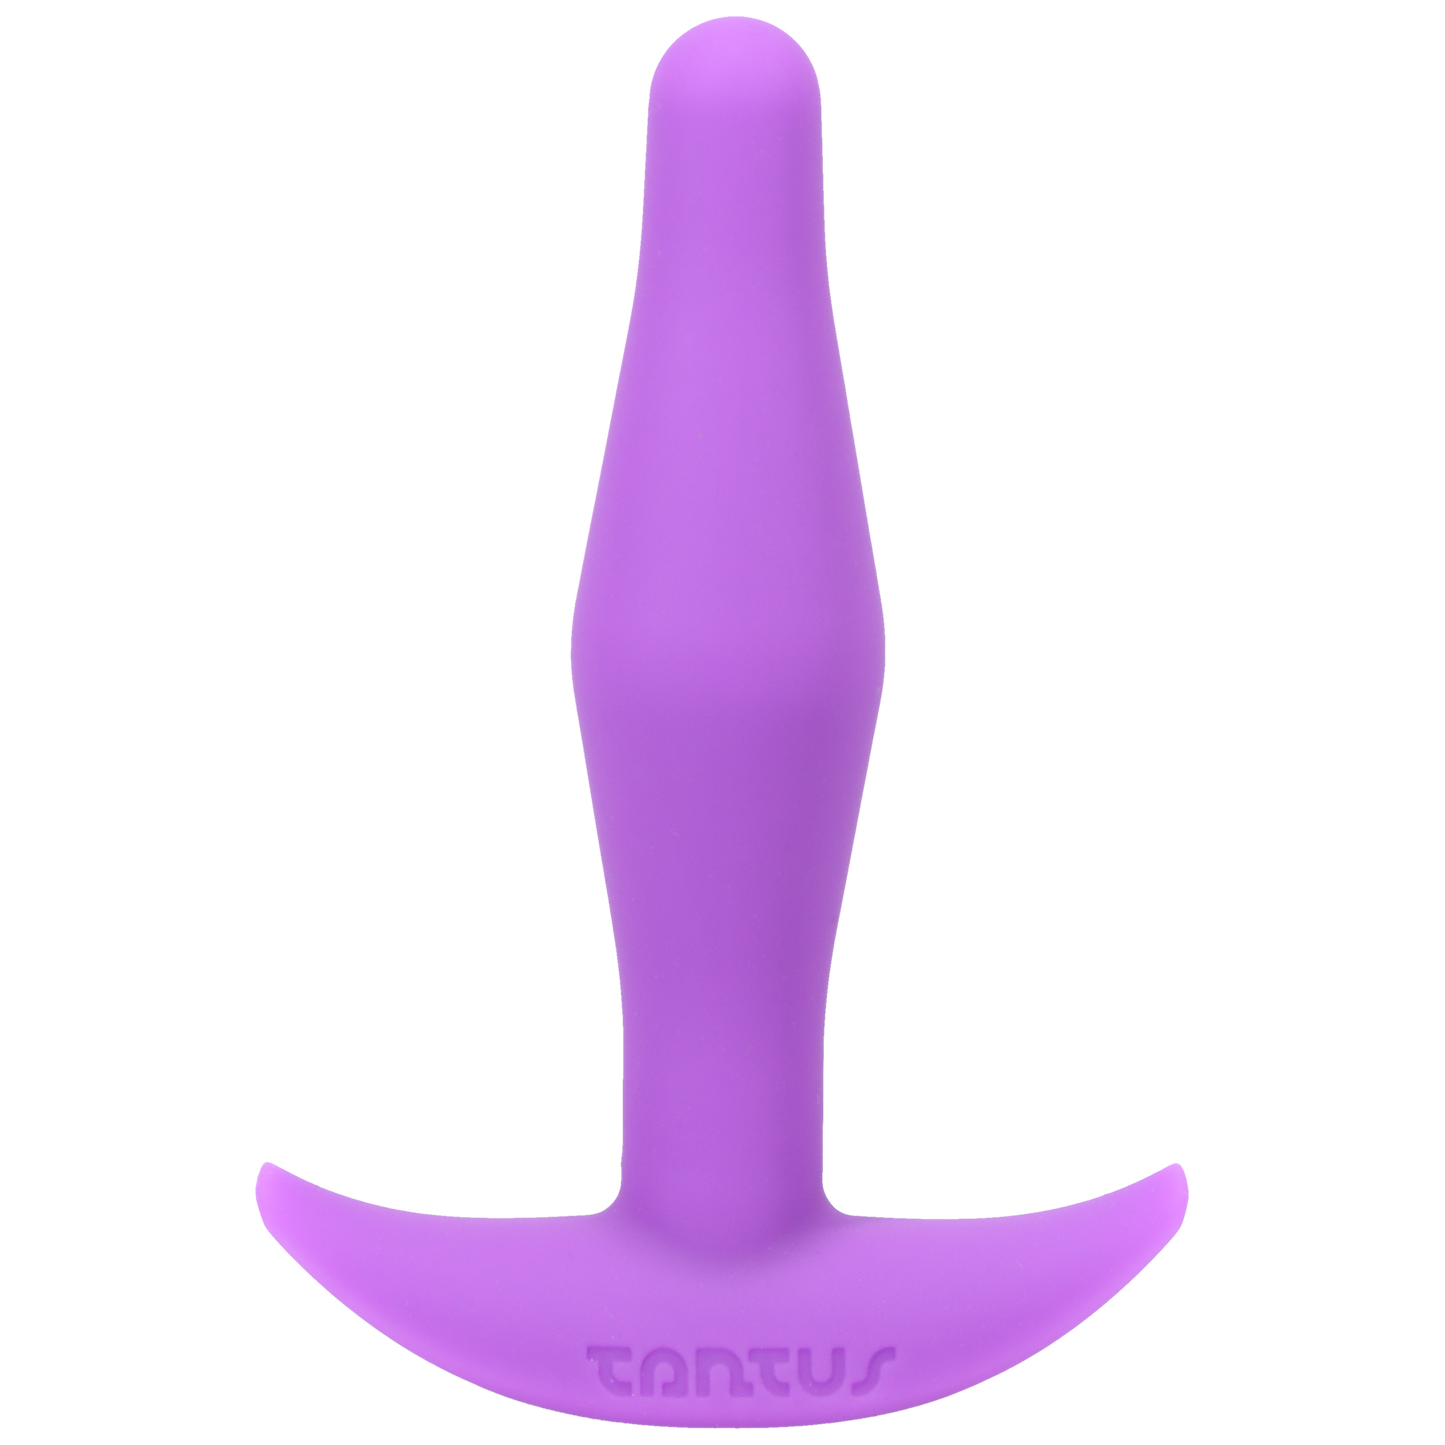 Tantus Silicone Little Flirt Butt Plug Purple Haze - Sexy Living